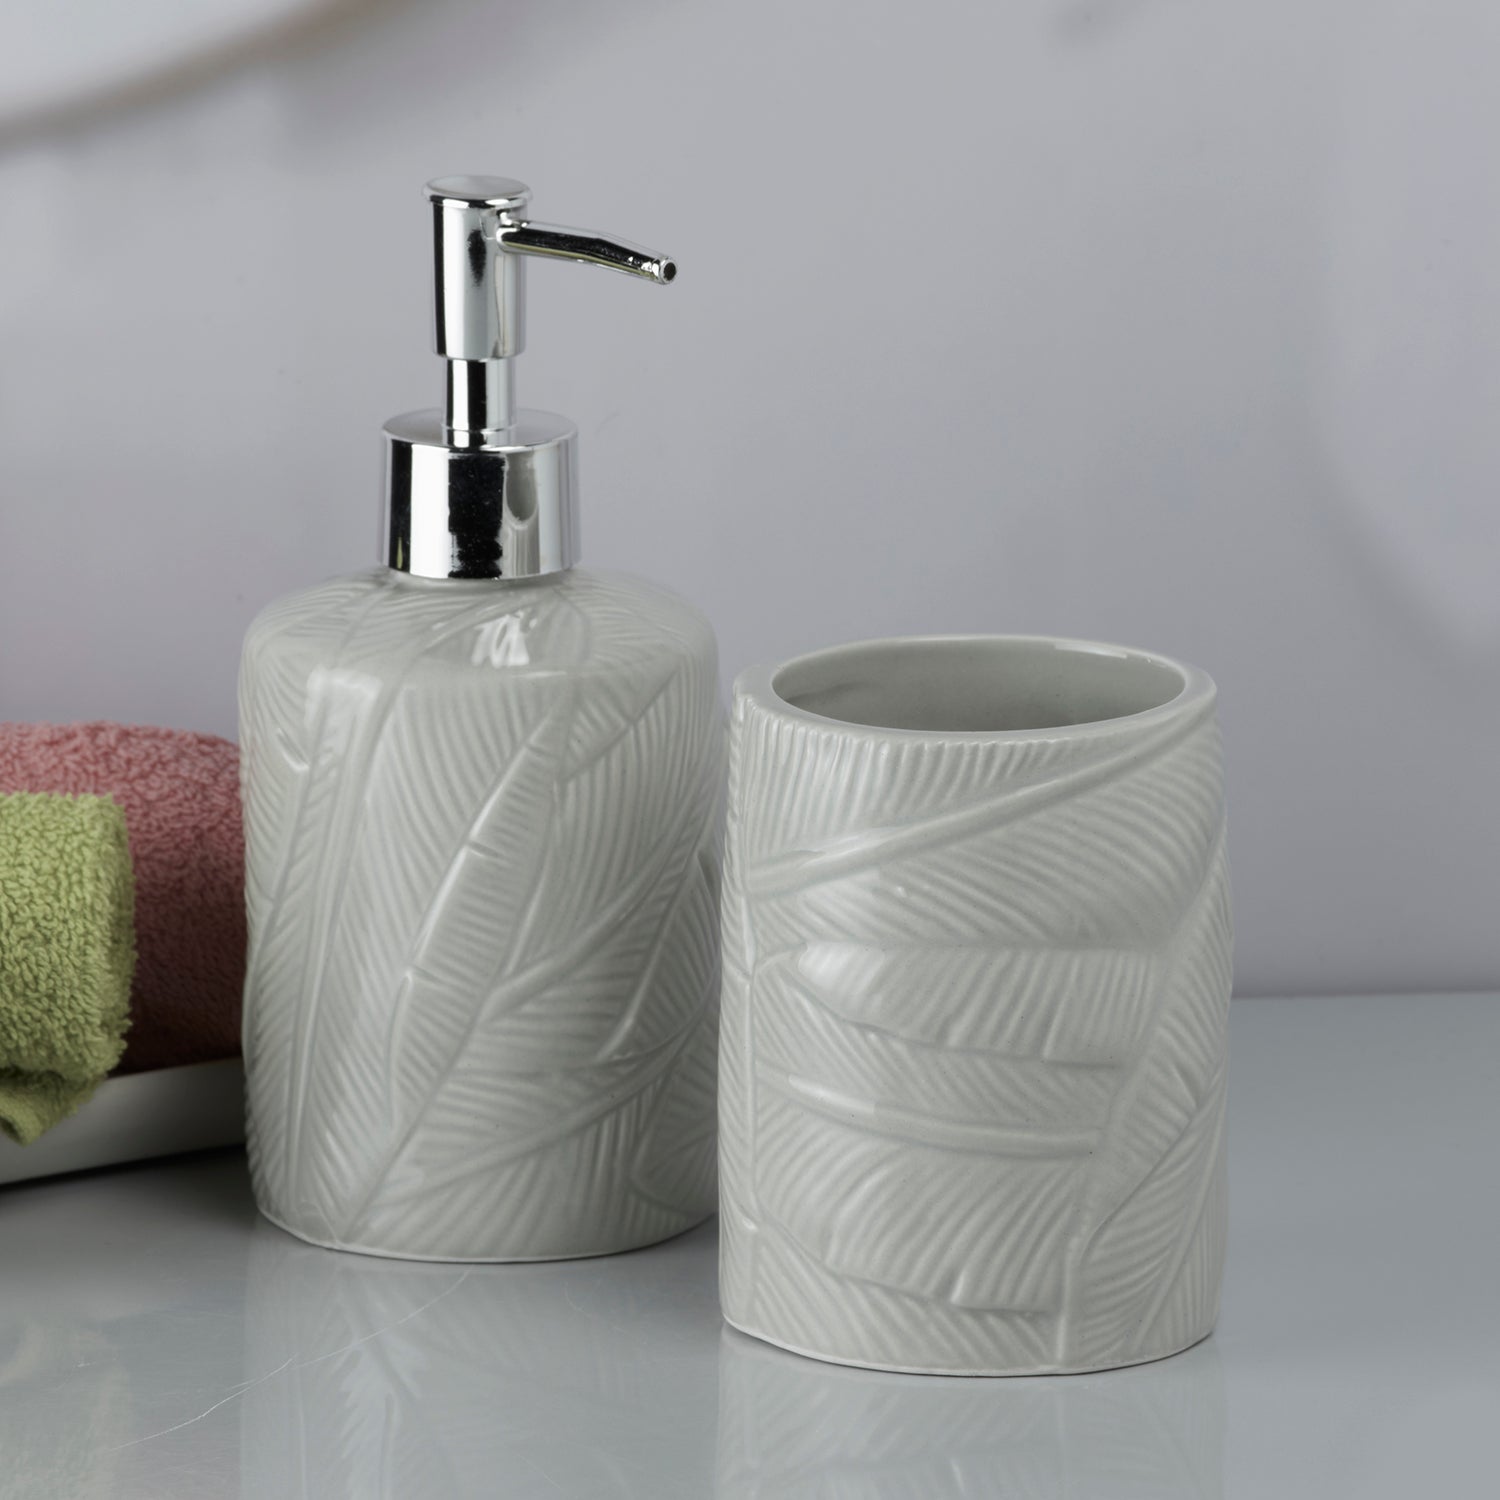 Ceramic Bathroom Accessories Set of 2 Bath Set with Soap Dispenser (9609)